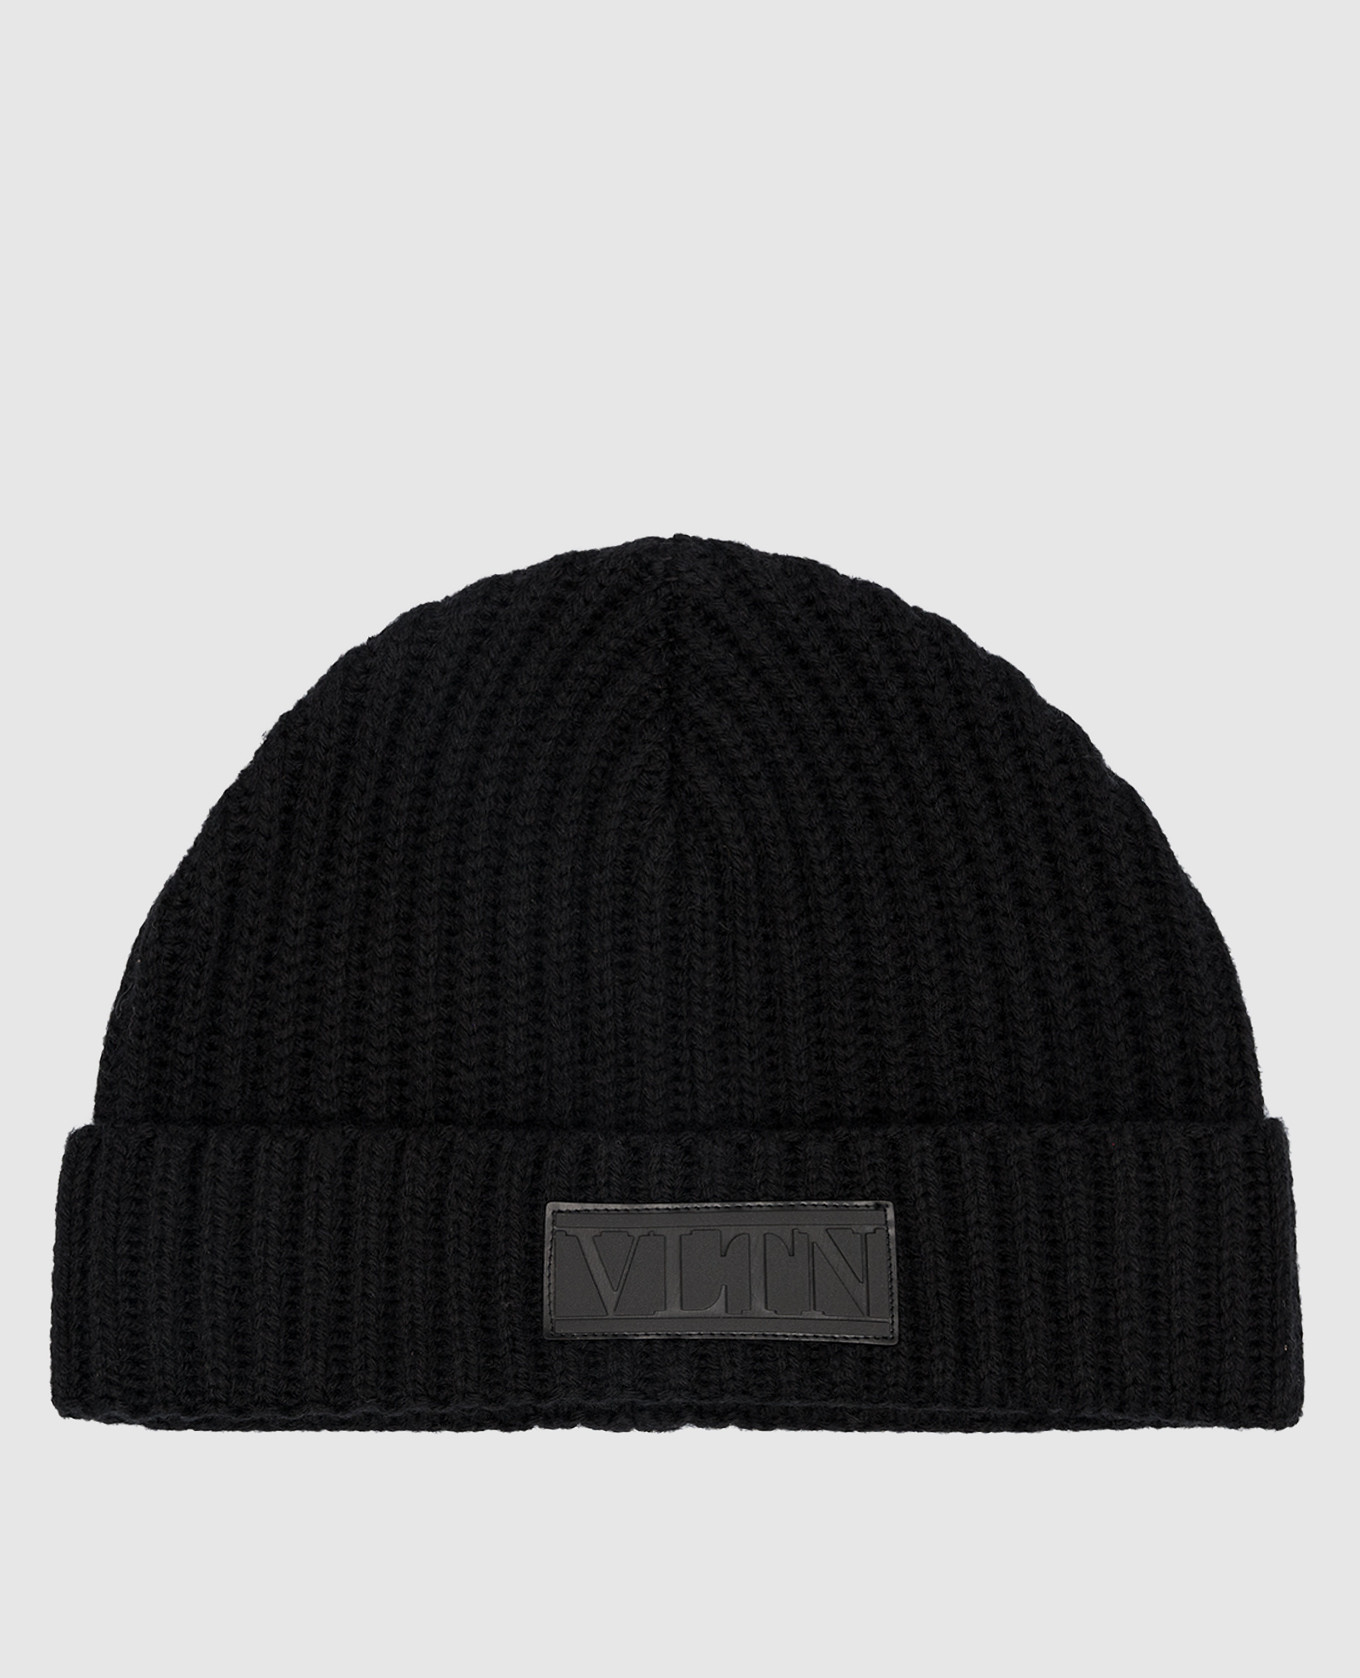 Black wool cap with VLTN logo